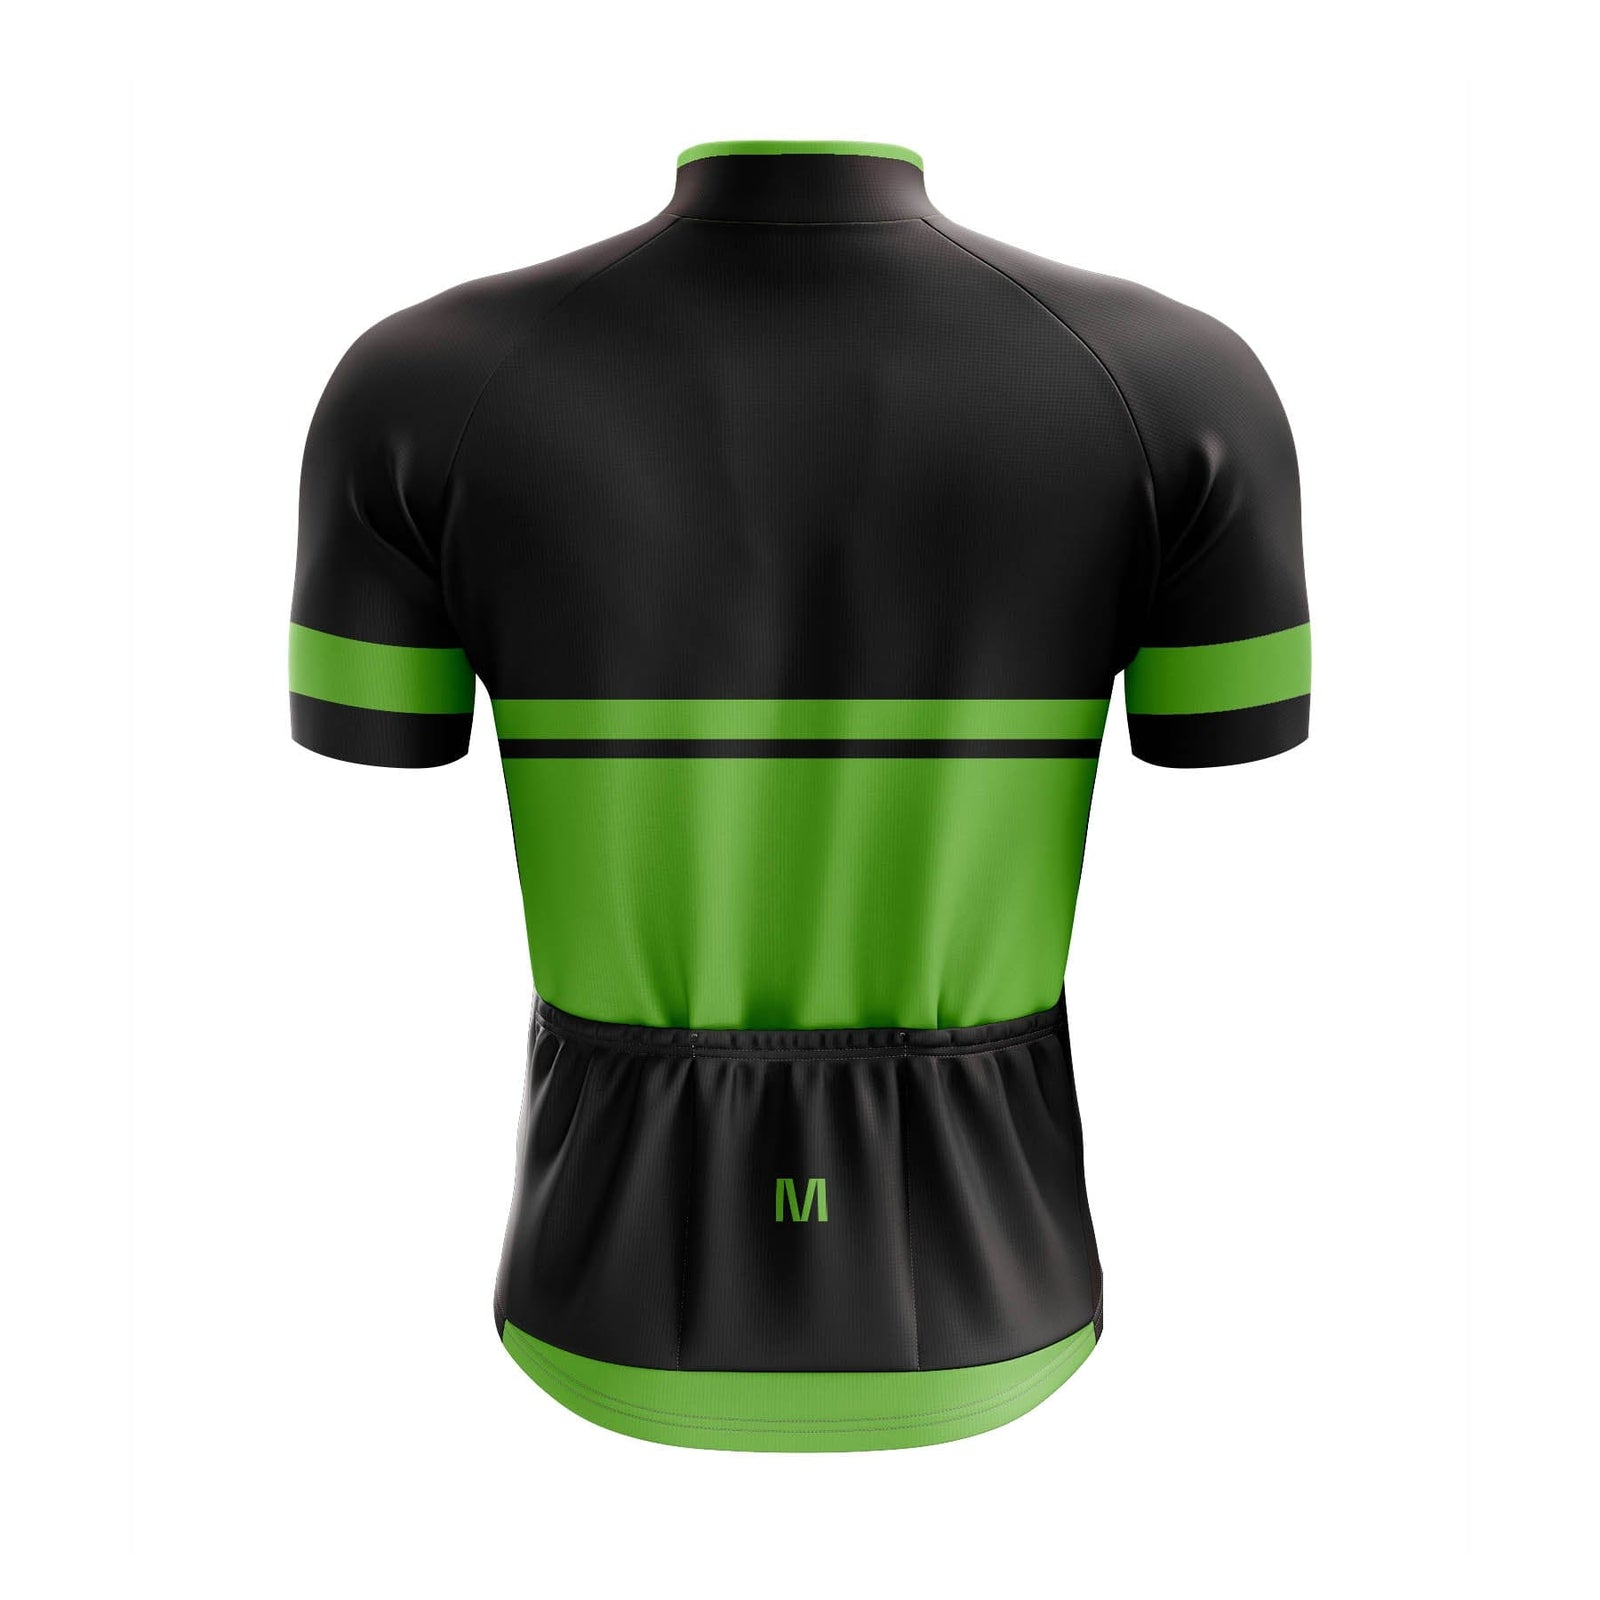 Montella Cycling Cycling Kit Men's Green Speed Cycling Jersey or Bibs